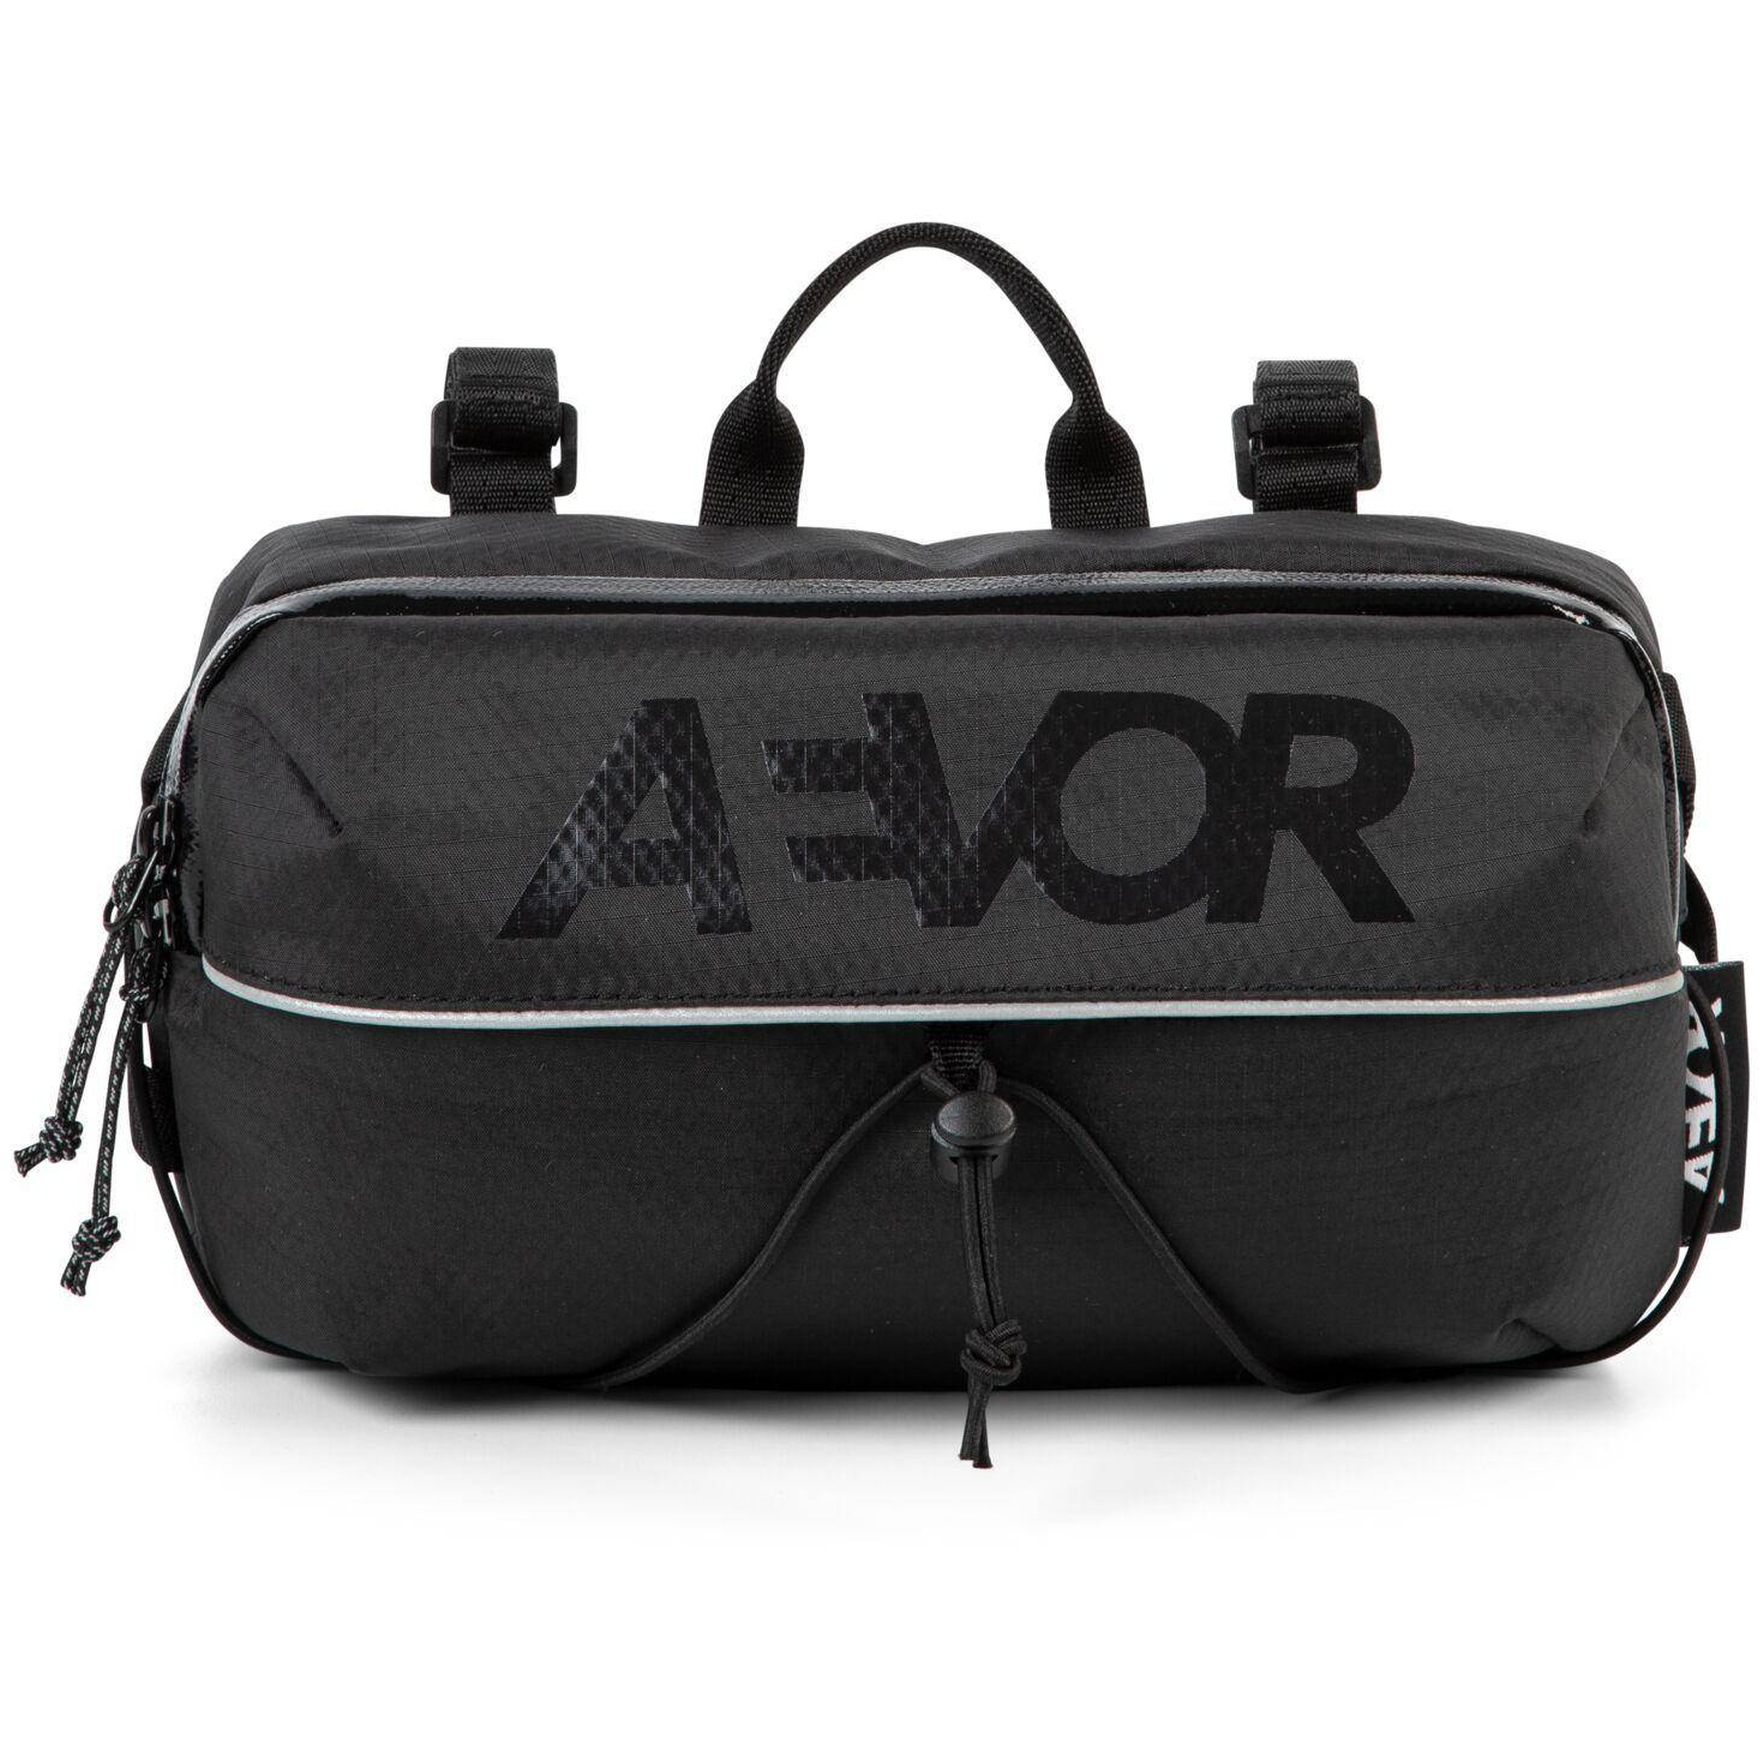 Productfoto van AEVOR Bar Bag Heptas / Stuurtas - Proof Black